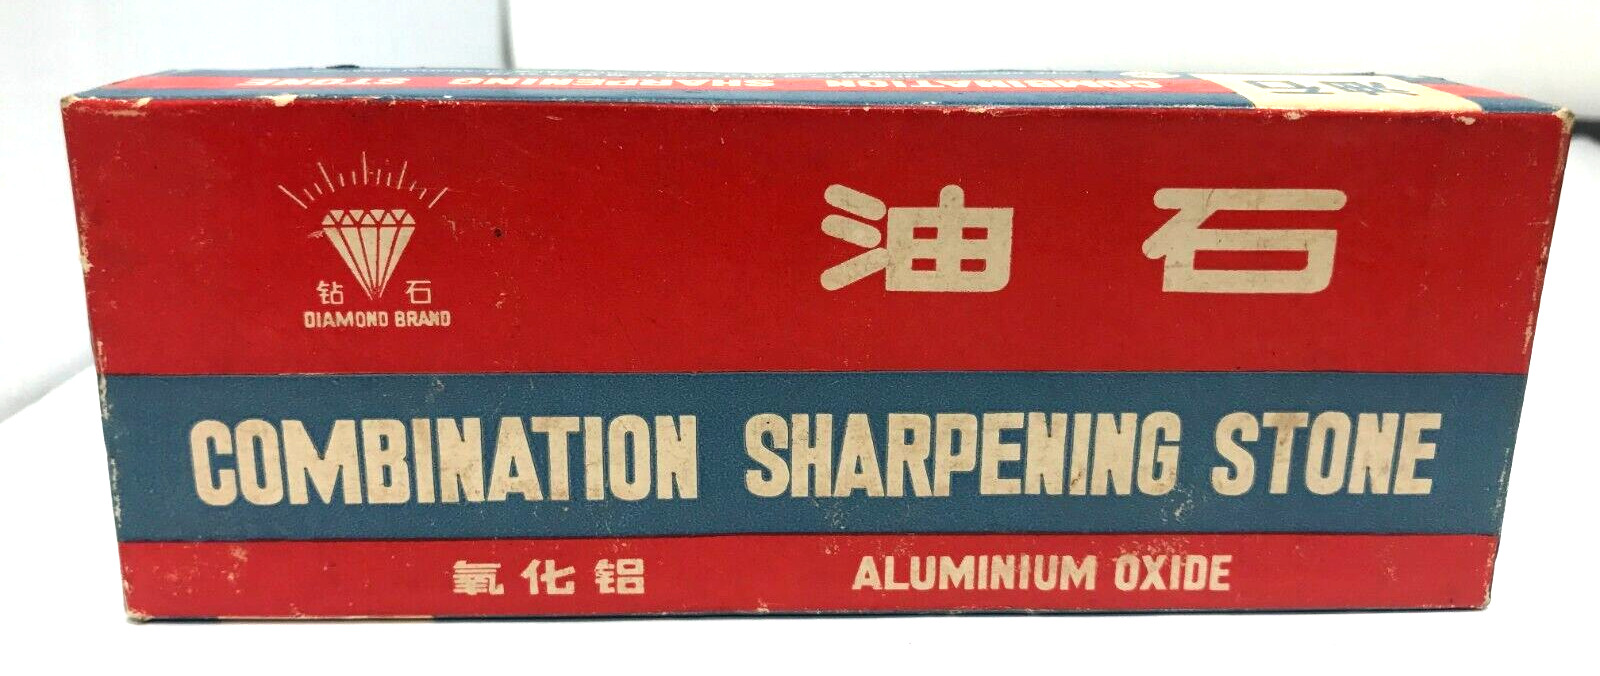 Vintage sharpening stone Combination  Aluminum Oxide made: PRC China Panda Brand